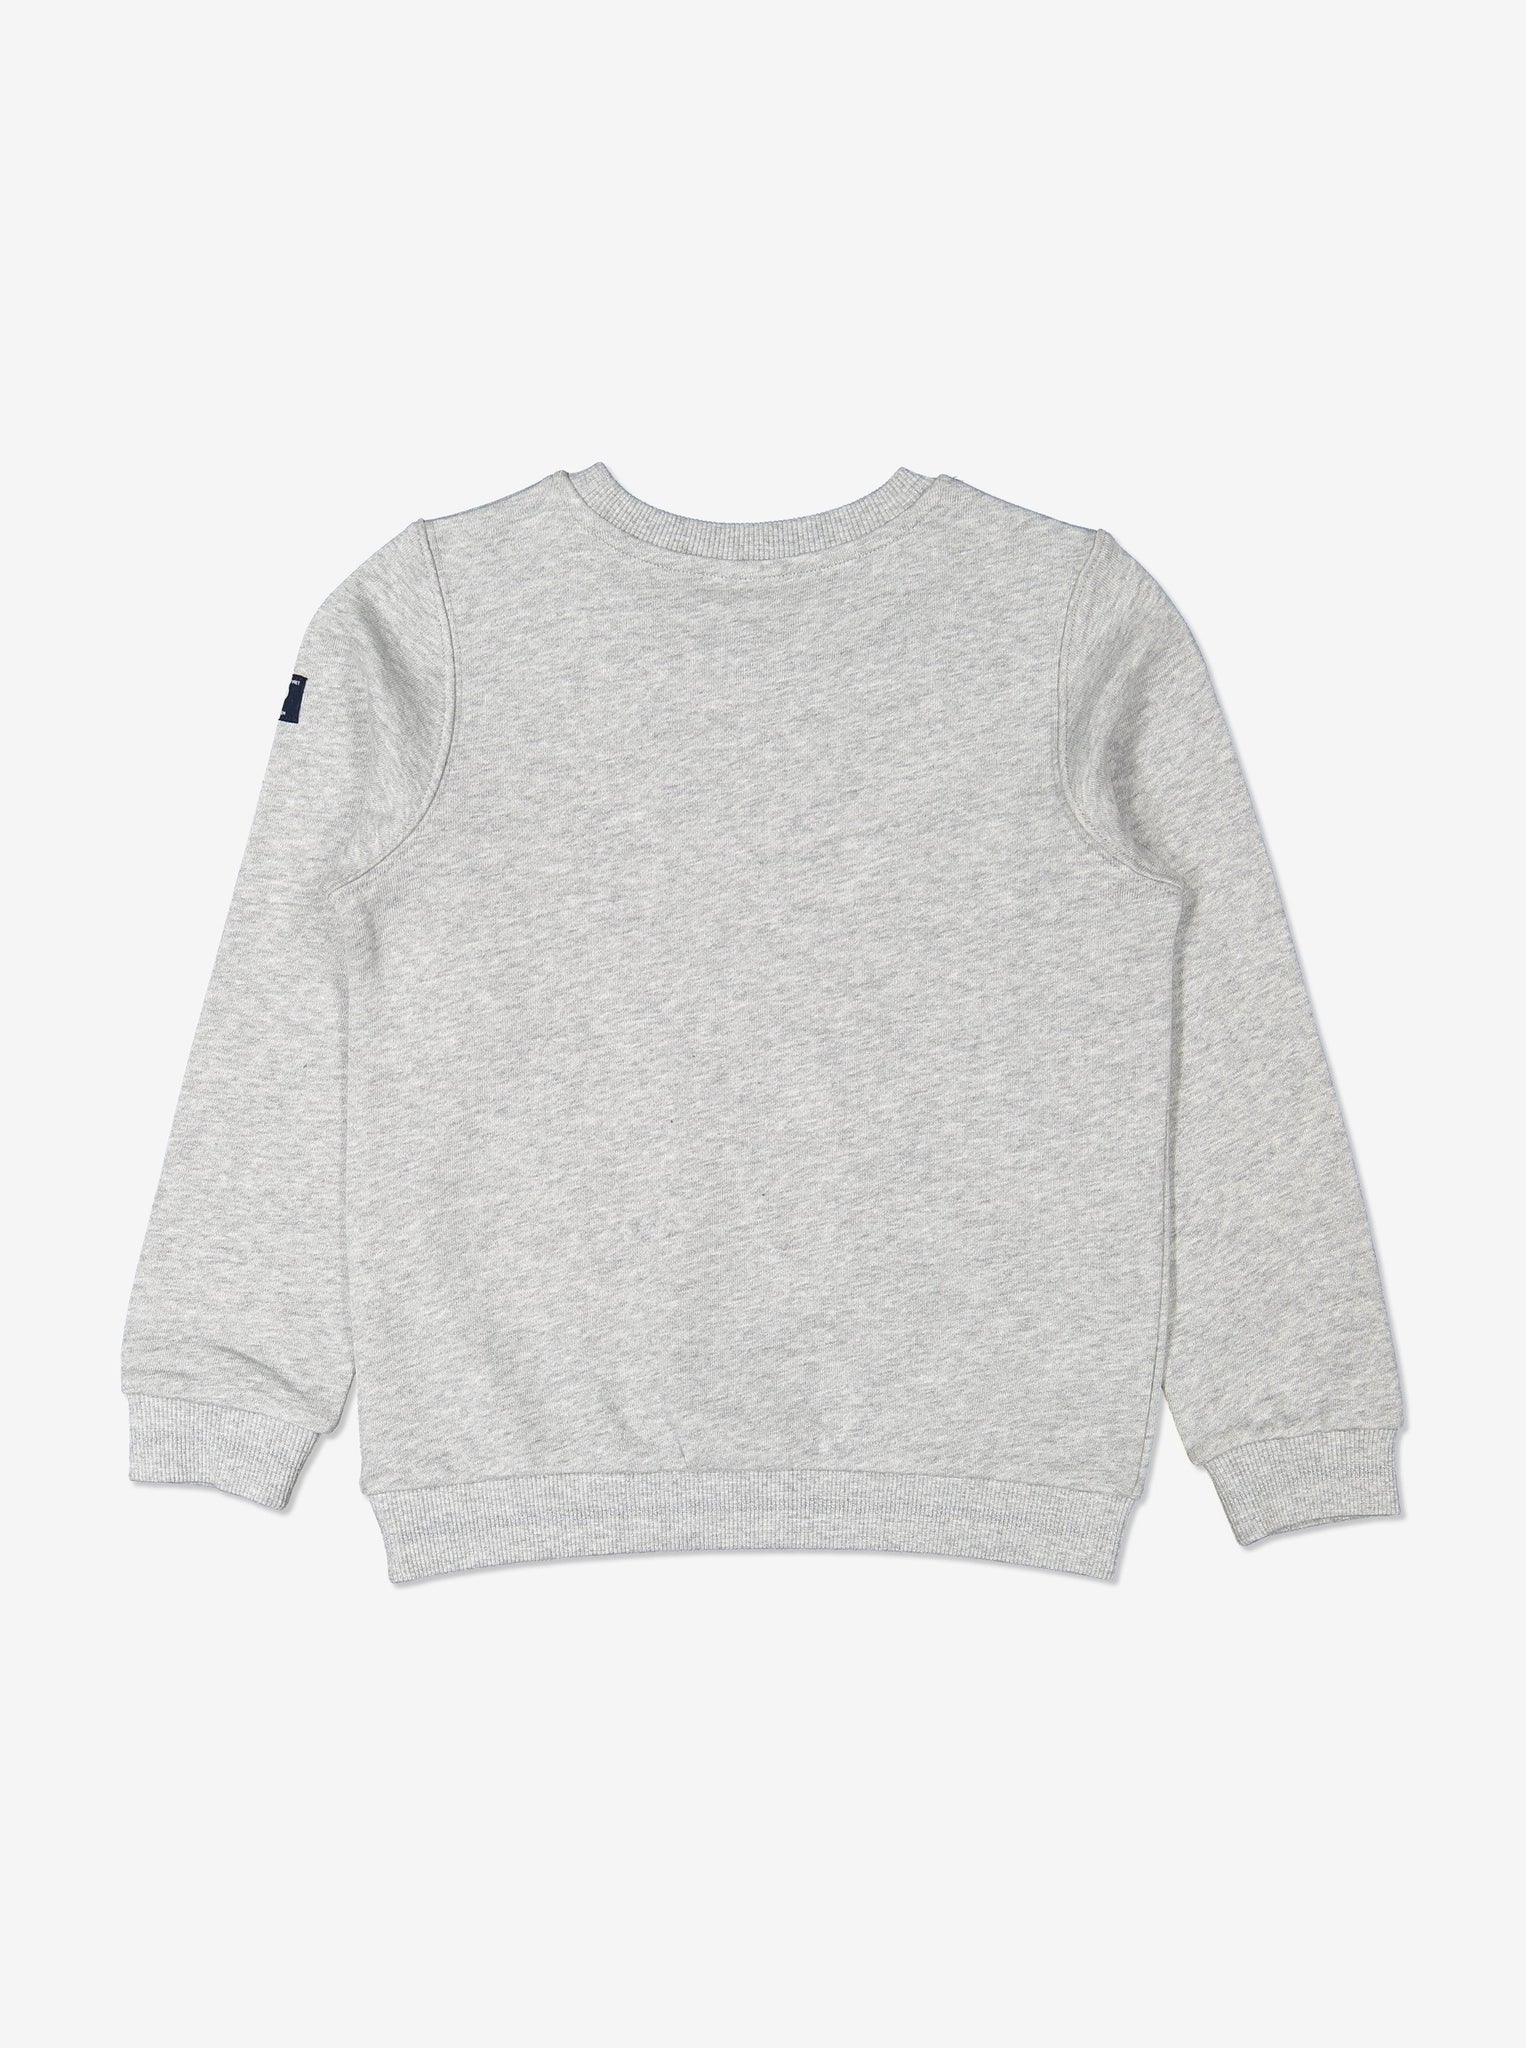 Girls Grey Kids Unicorn Sweatshirt